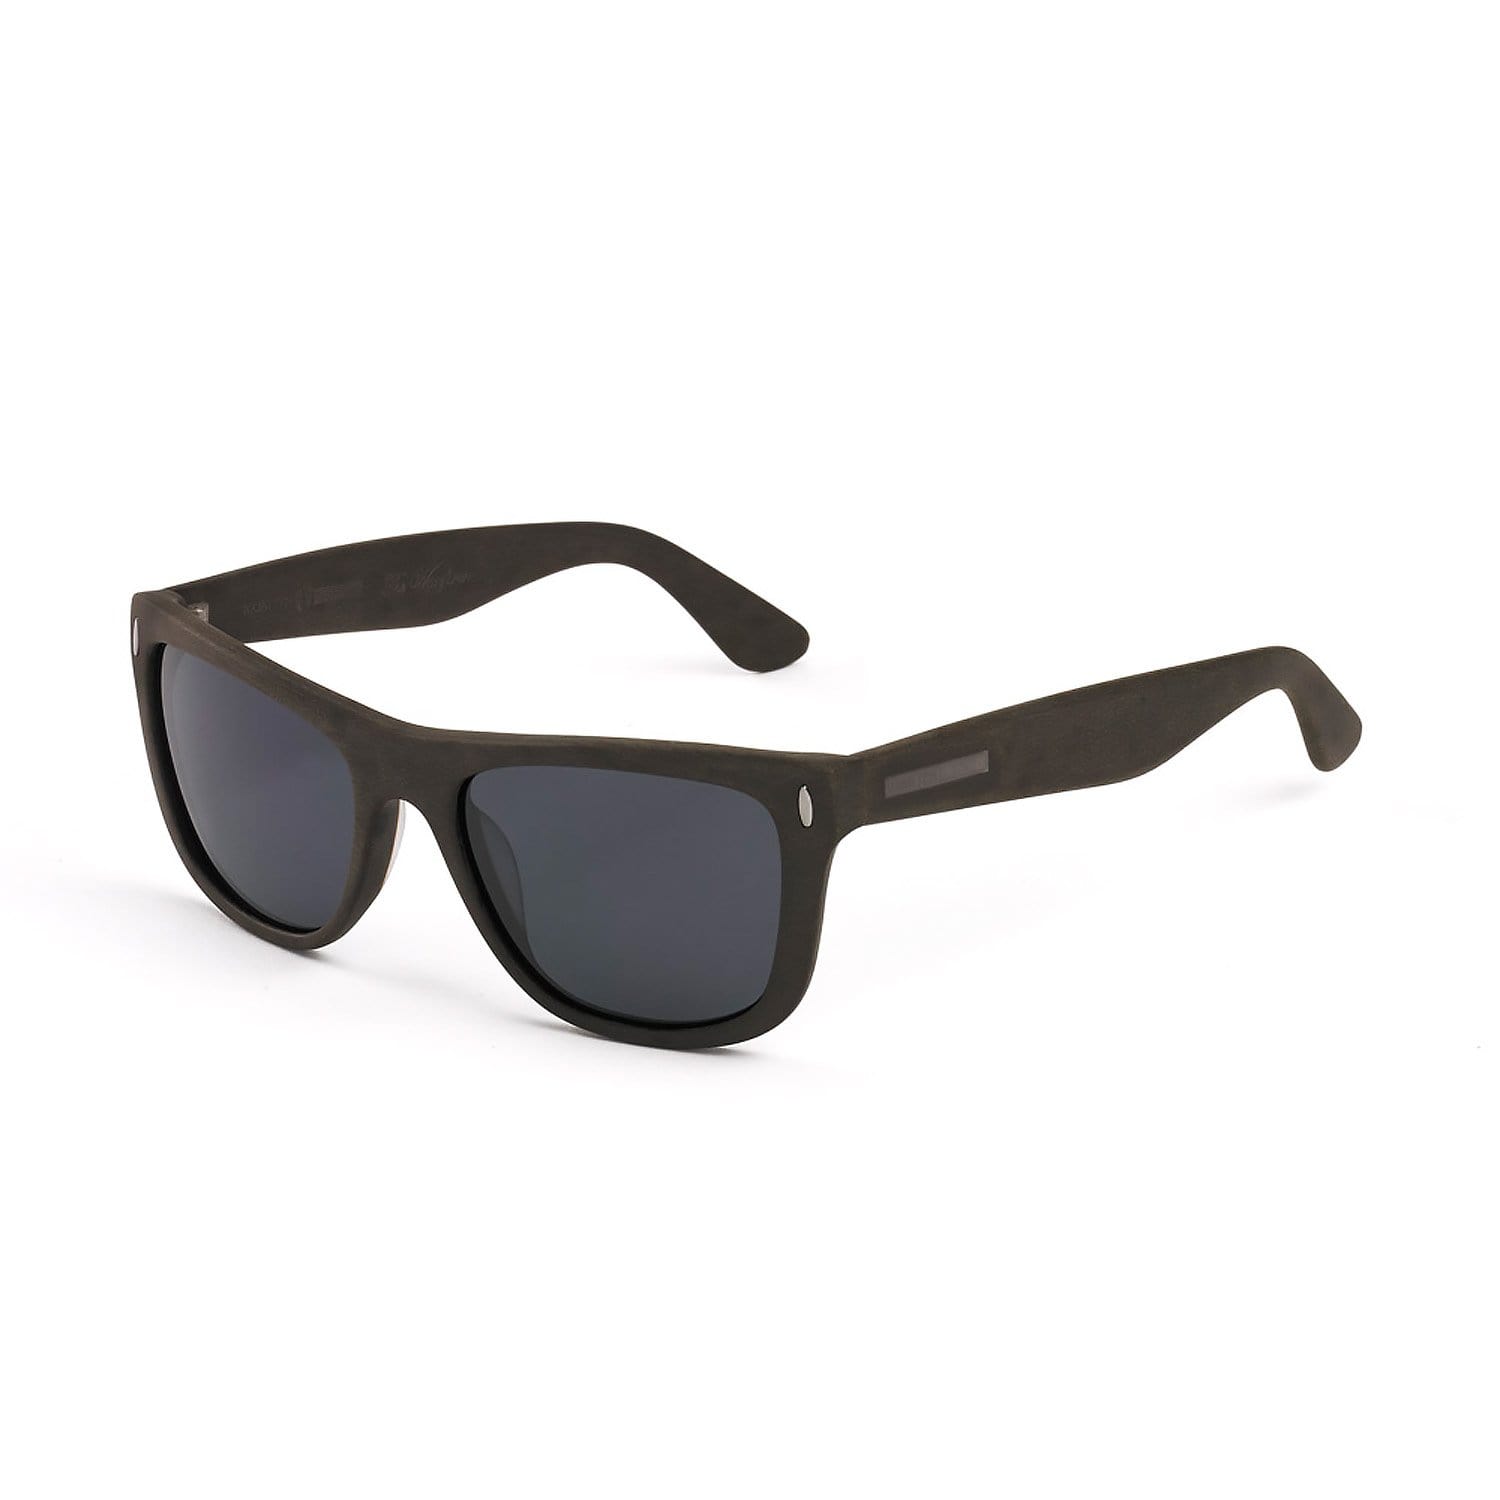 Hang Ten Gold Apparel : Eyewear - Sunglasses Hang Ten Gold The Wavefarer2-Brown Wood/Smoke Lens